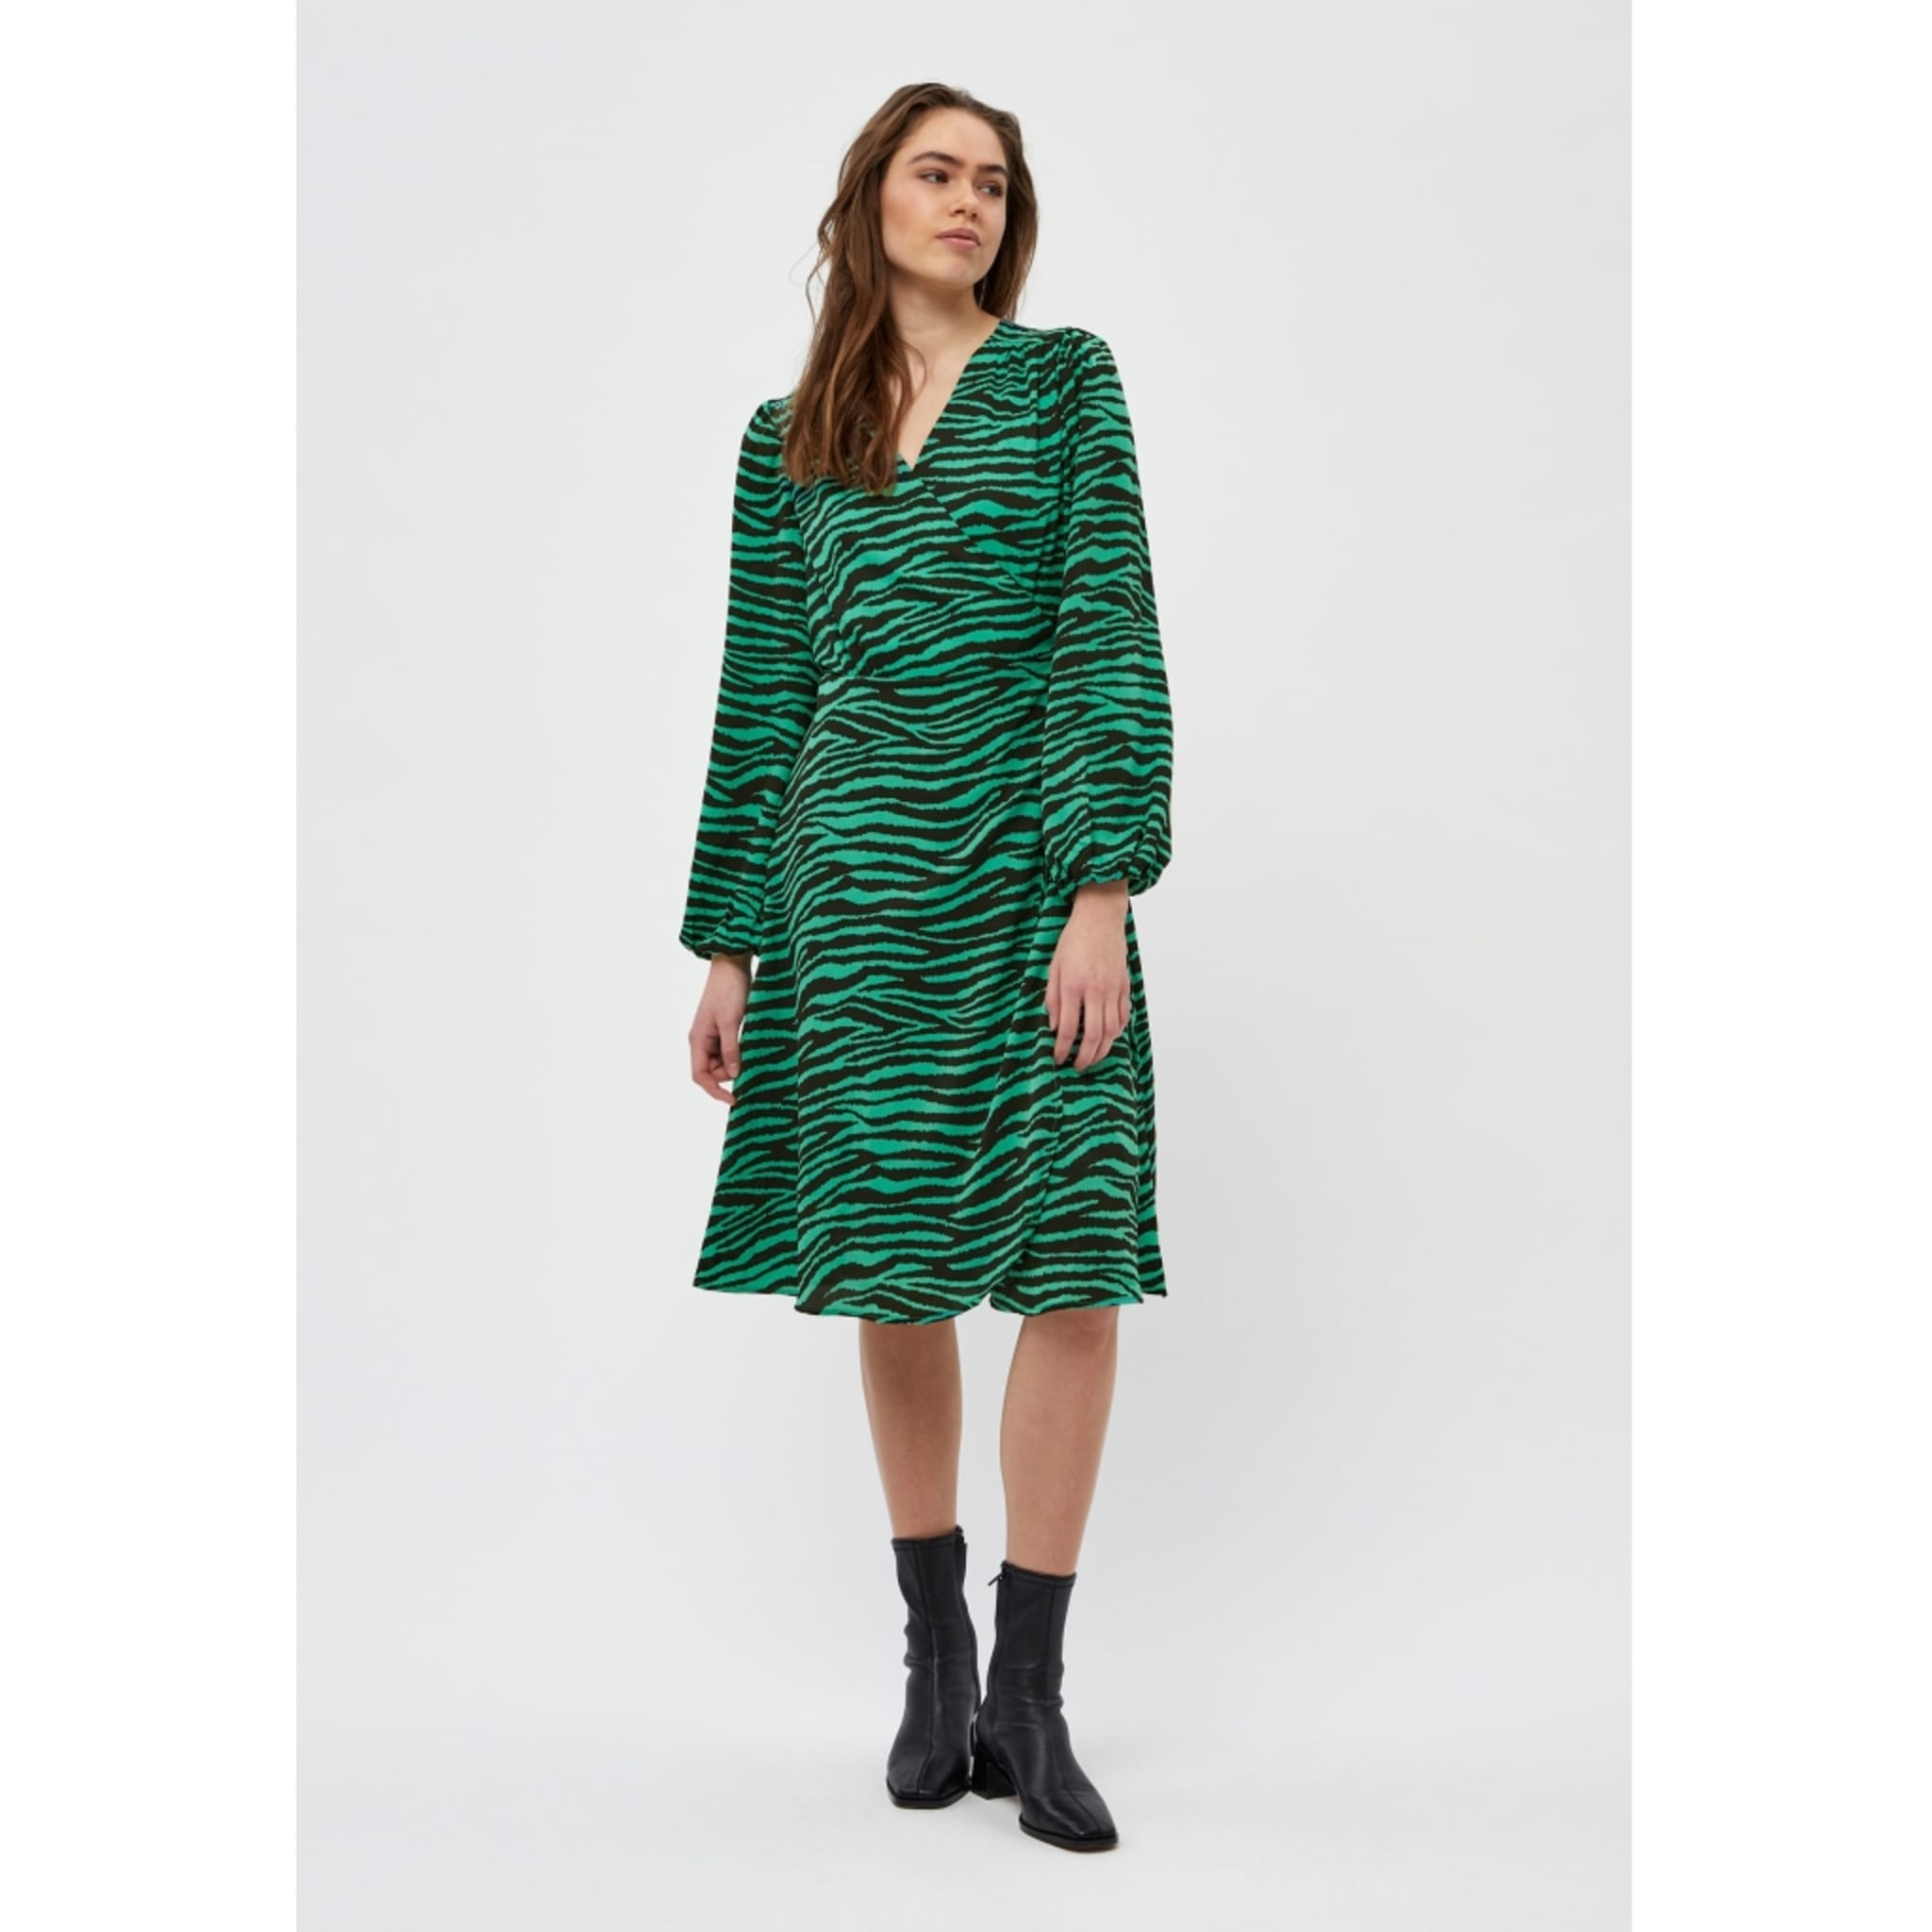 Evelyn Wrap Dress, apple green animal print